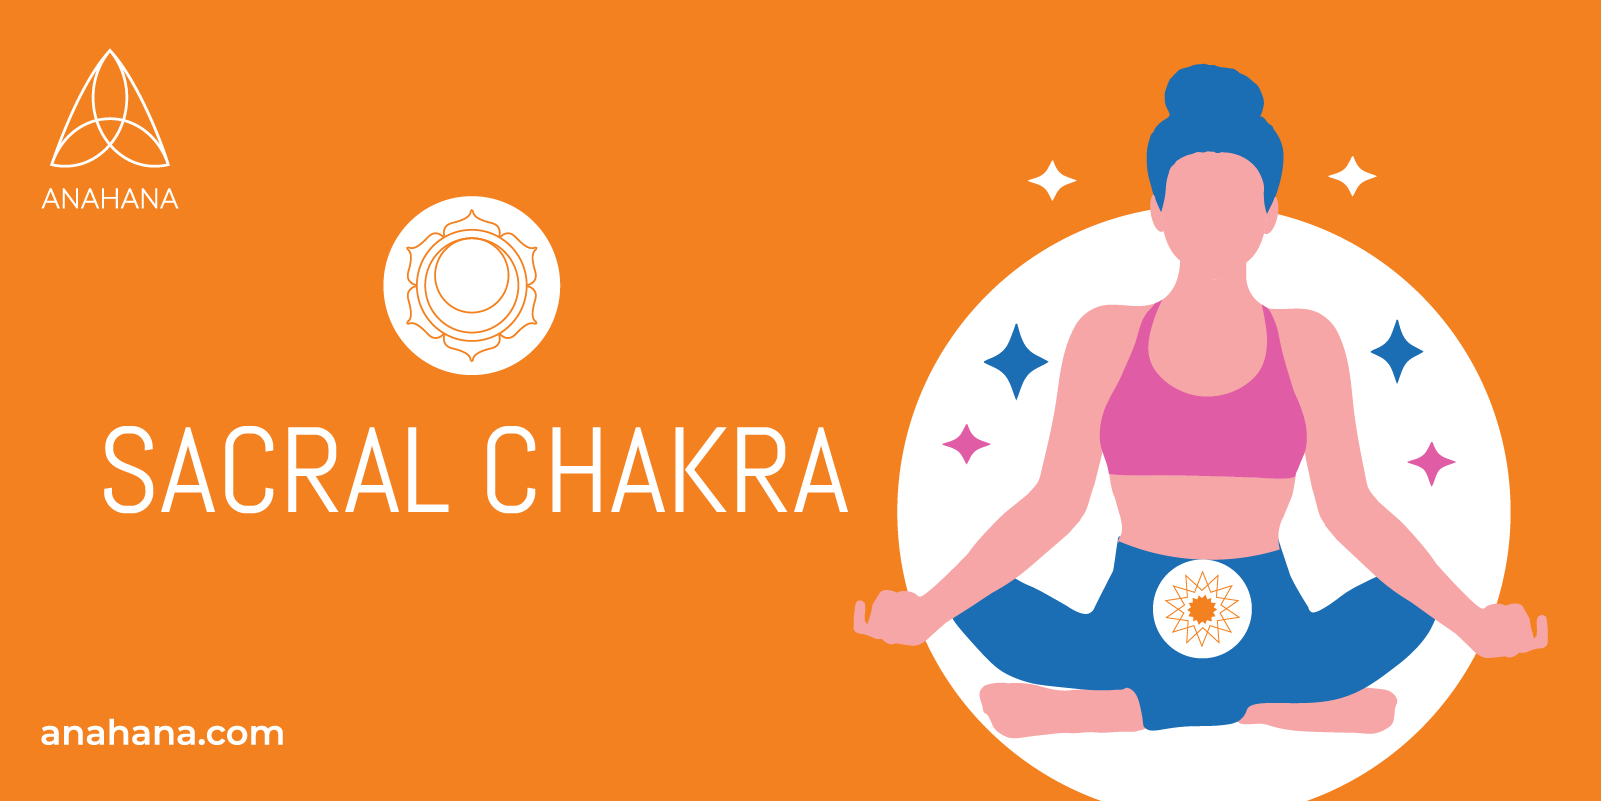 resumo do chakra sacral